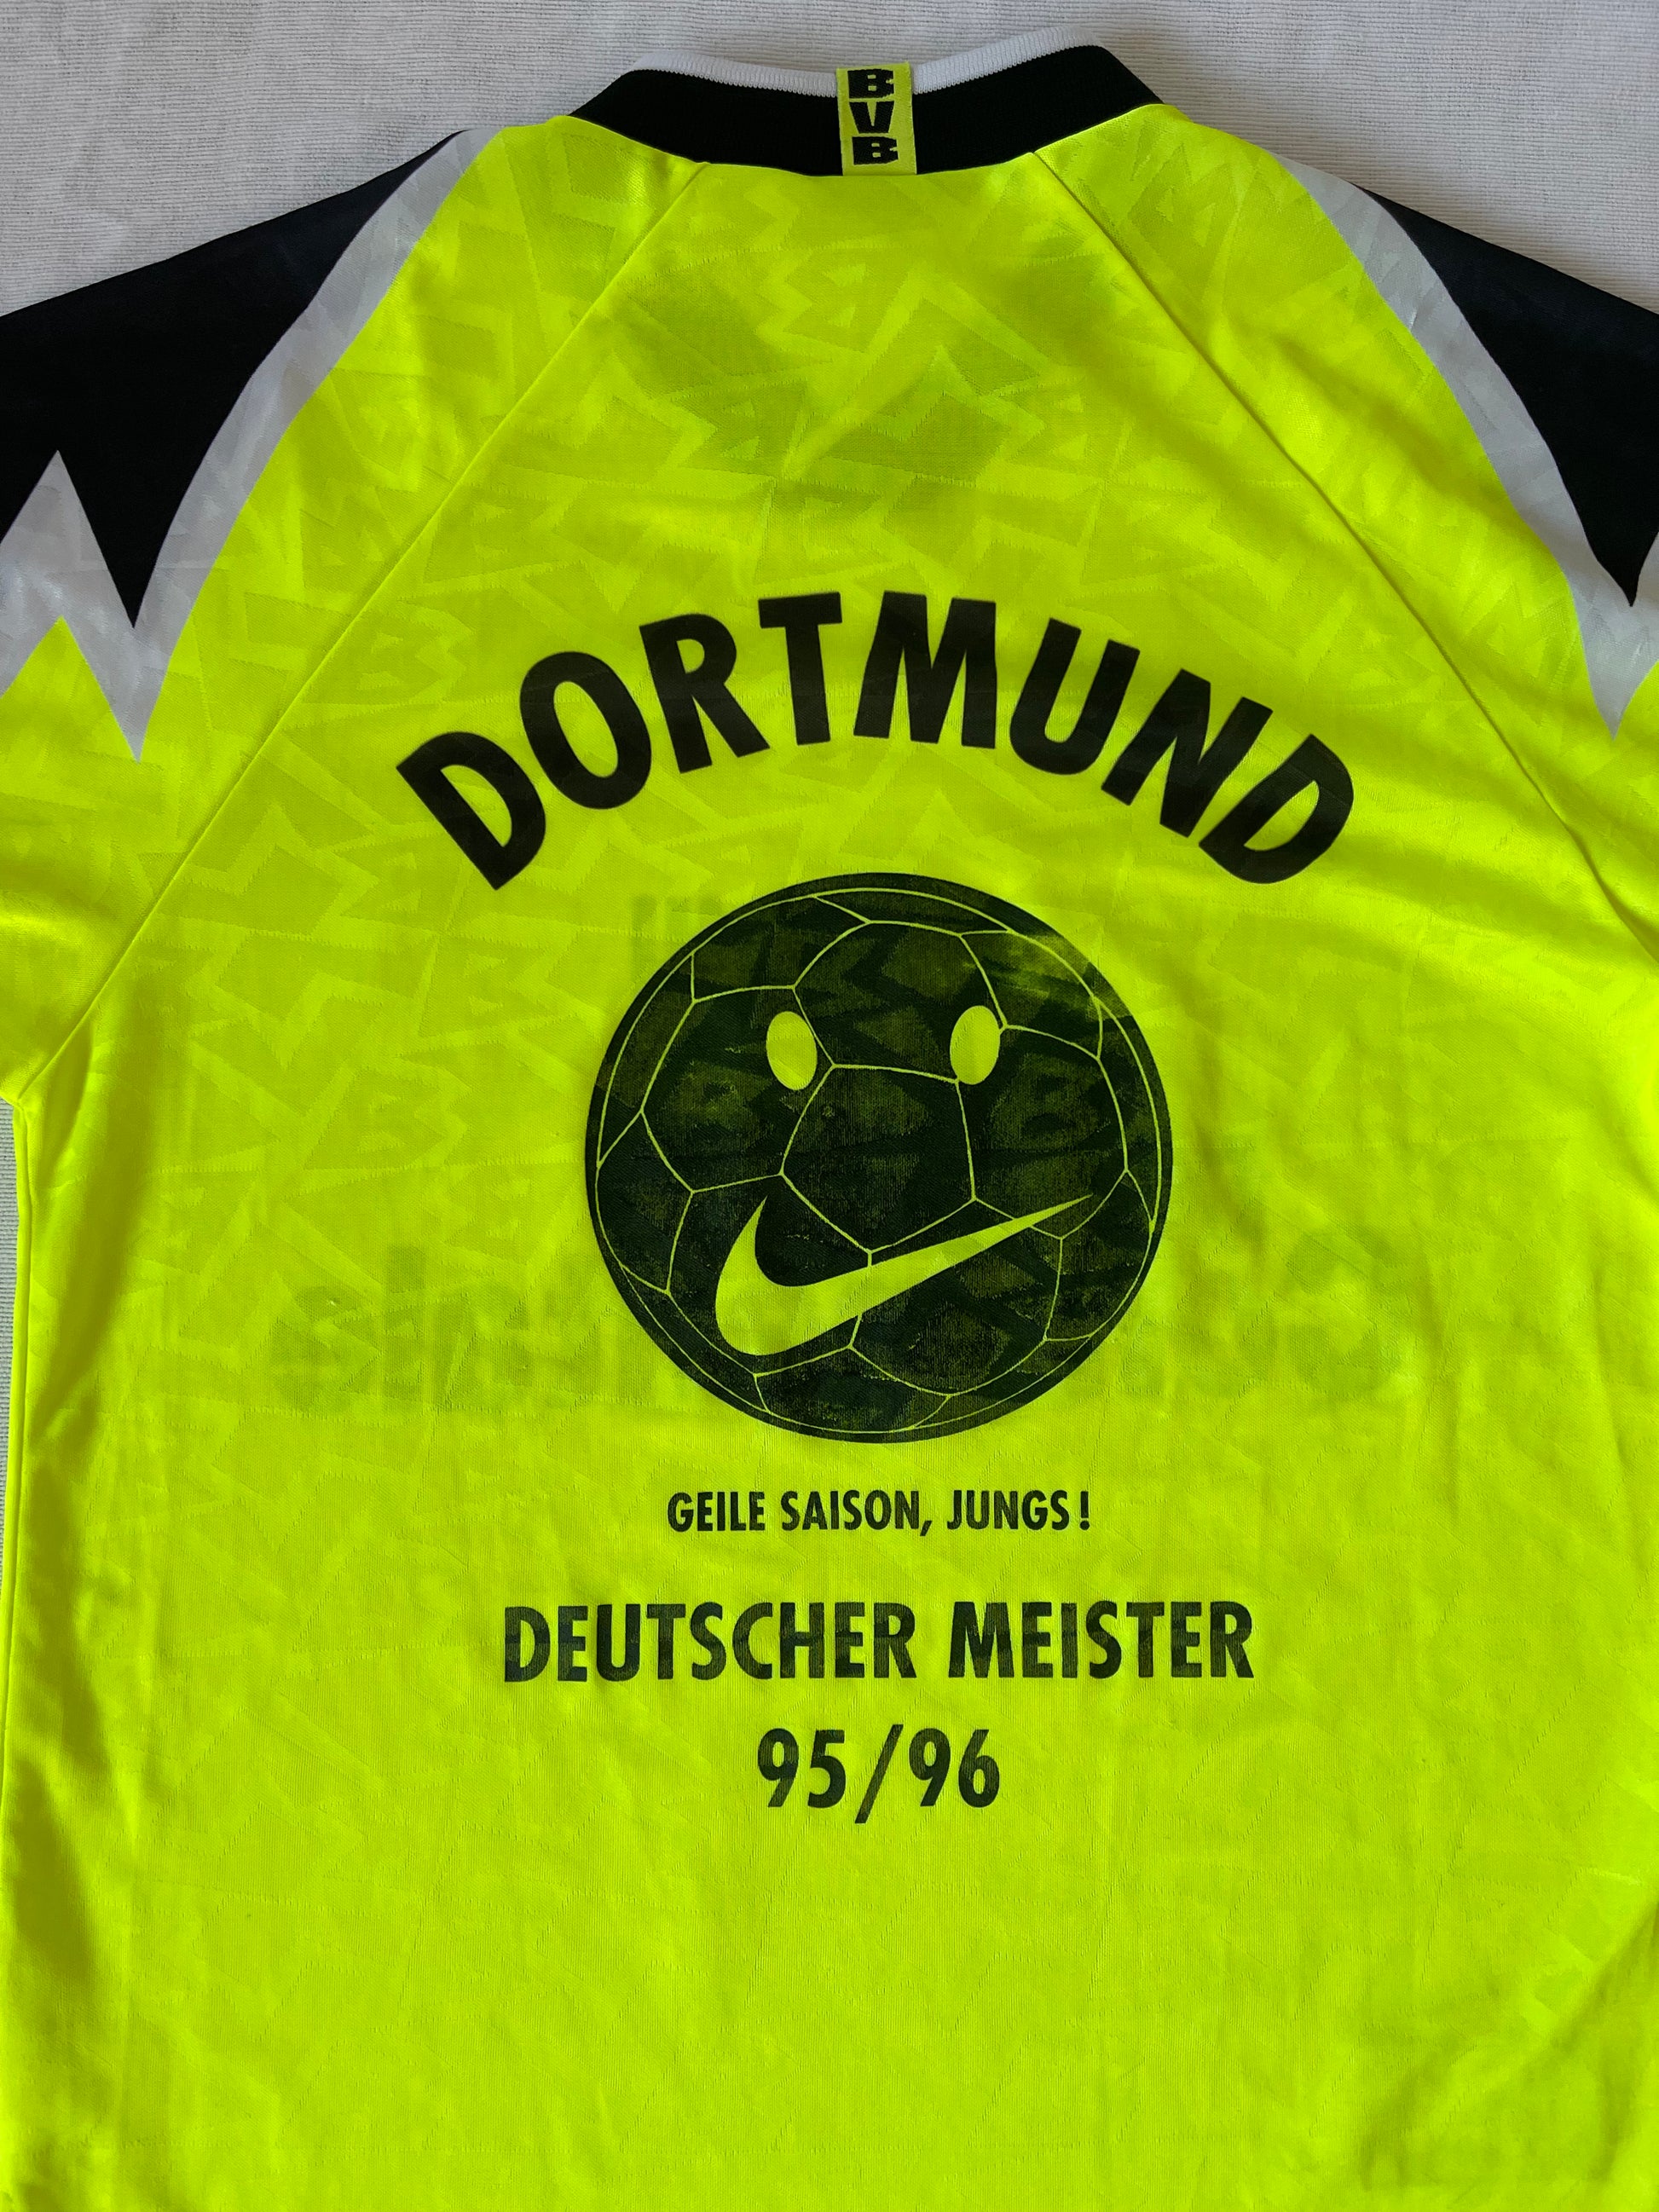 Vintage Borussia Dortmund BVB Nike Premier 1995-1996 Home Football Shirt Size L Die Continentale Neon Yellow